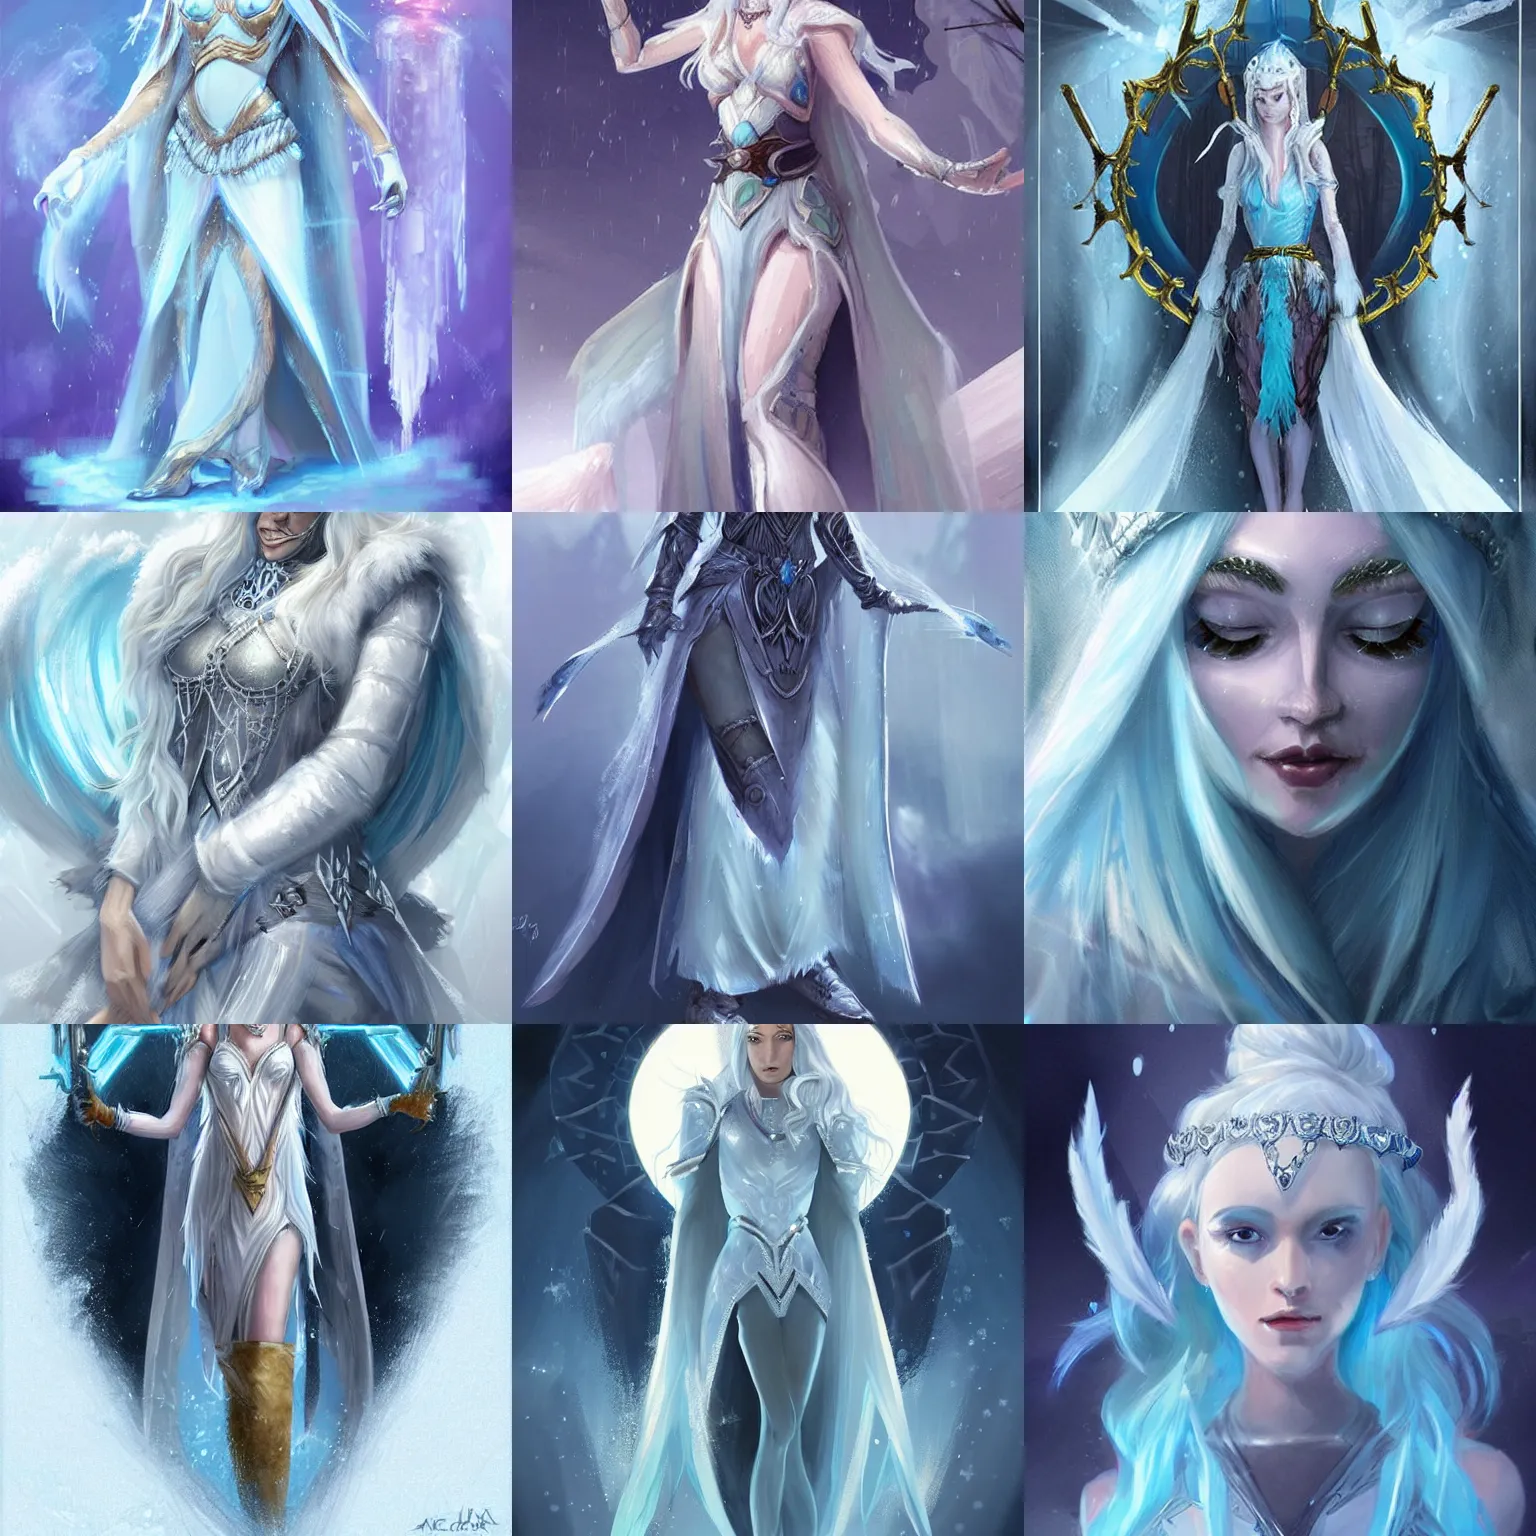 Prompt: The ice queen, fantasy concept art, trending on ArtStation, Pinterest